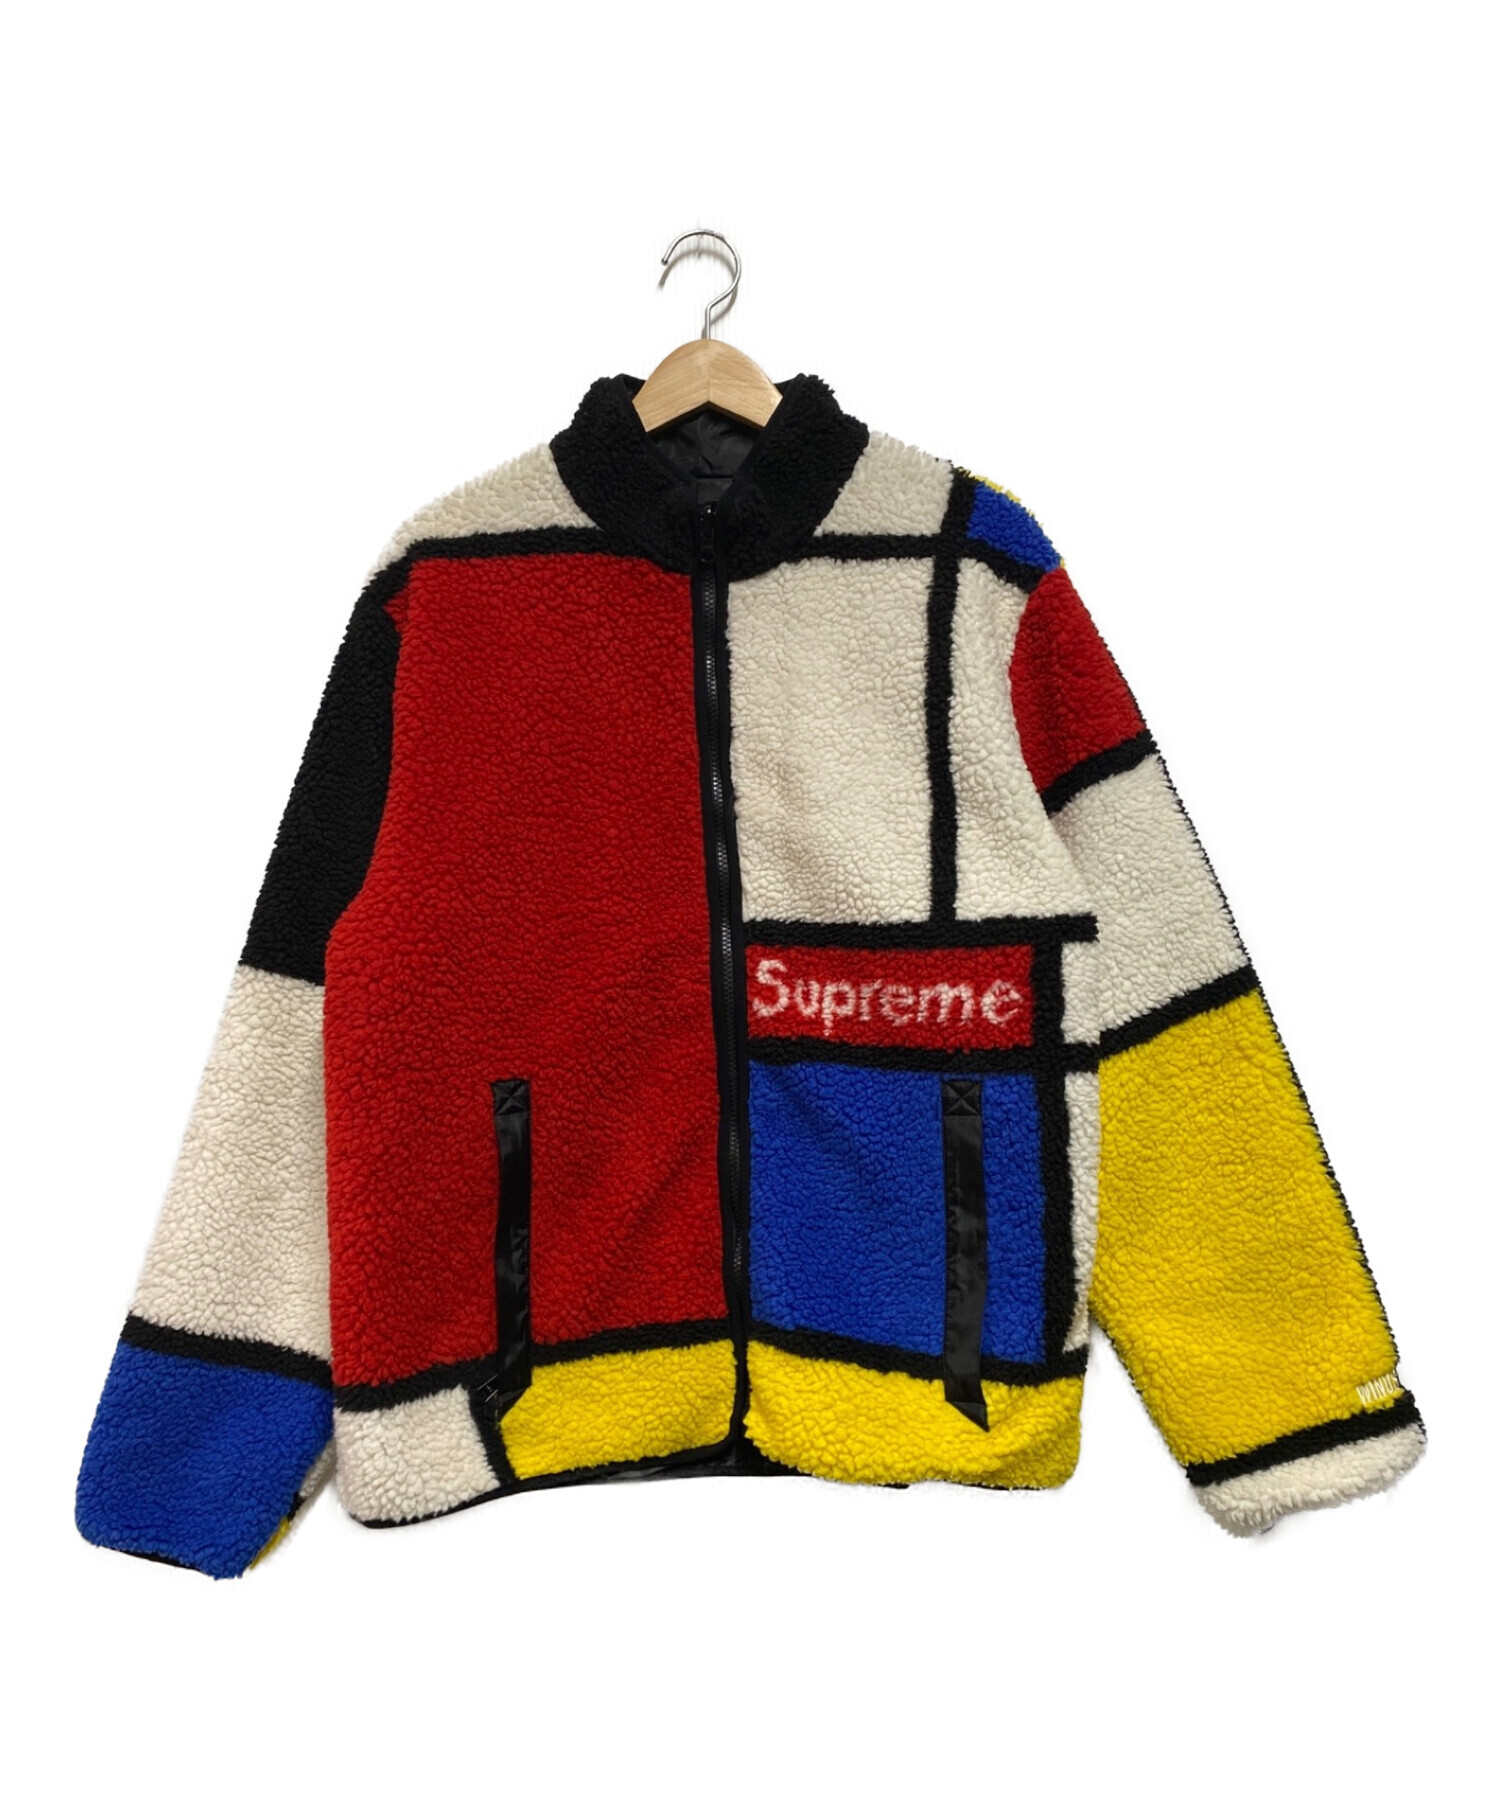 Supreme colorblocked fleece jacket